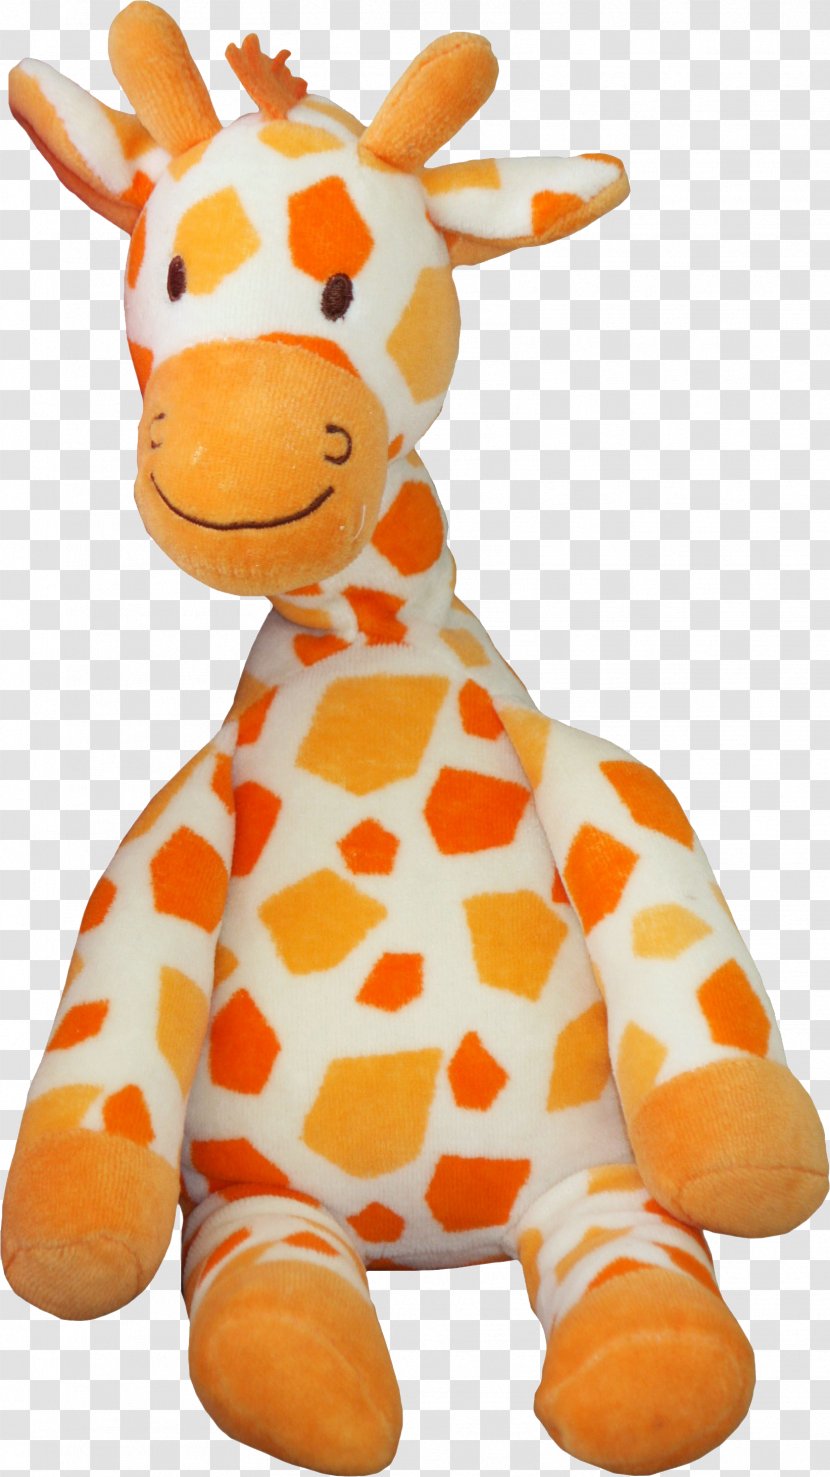 giraffe cuddly toys